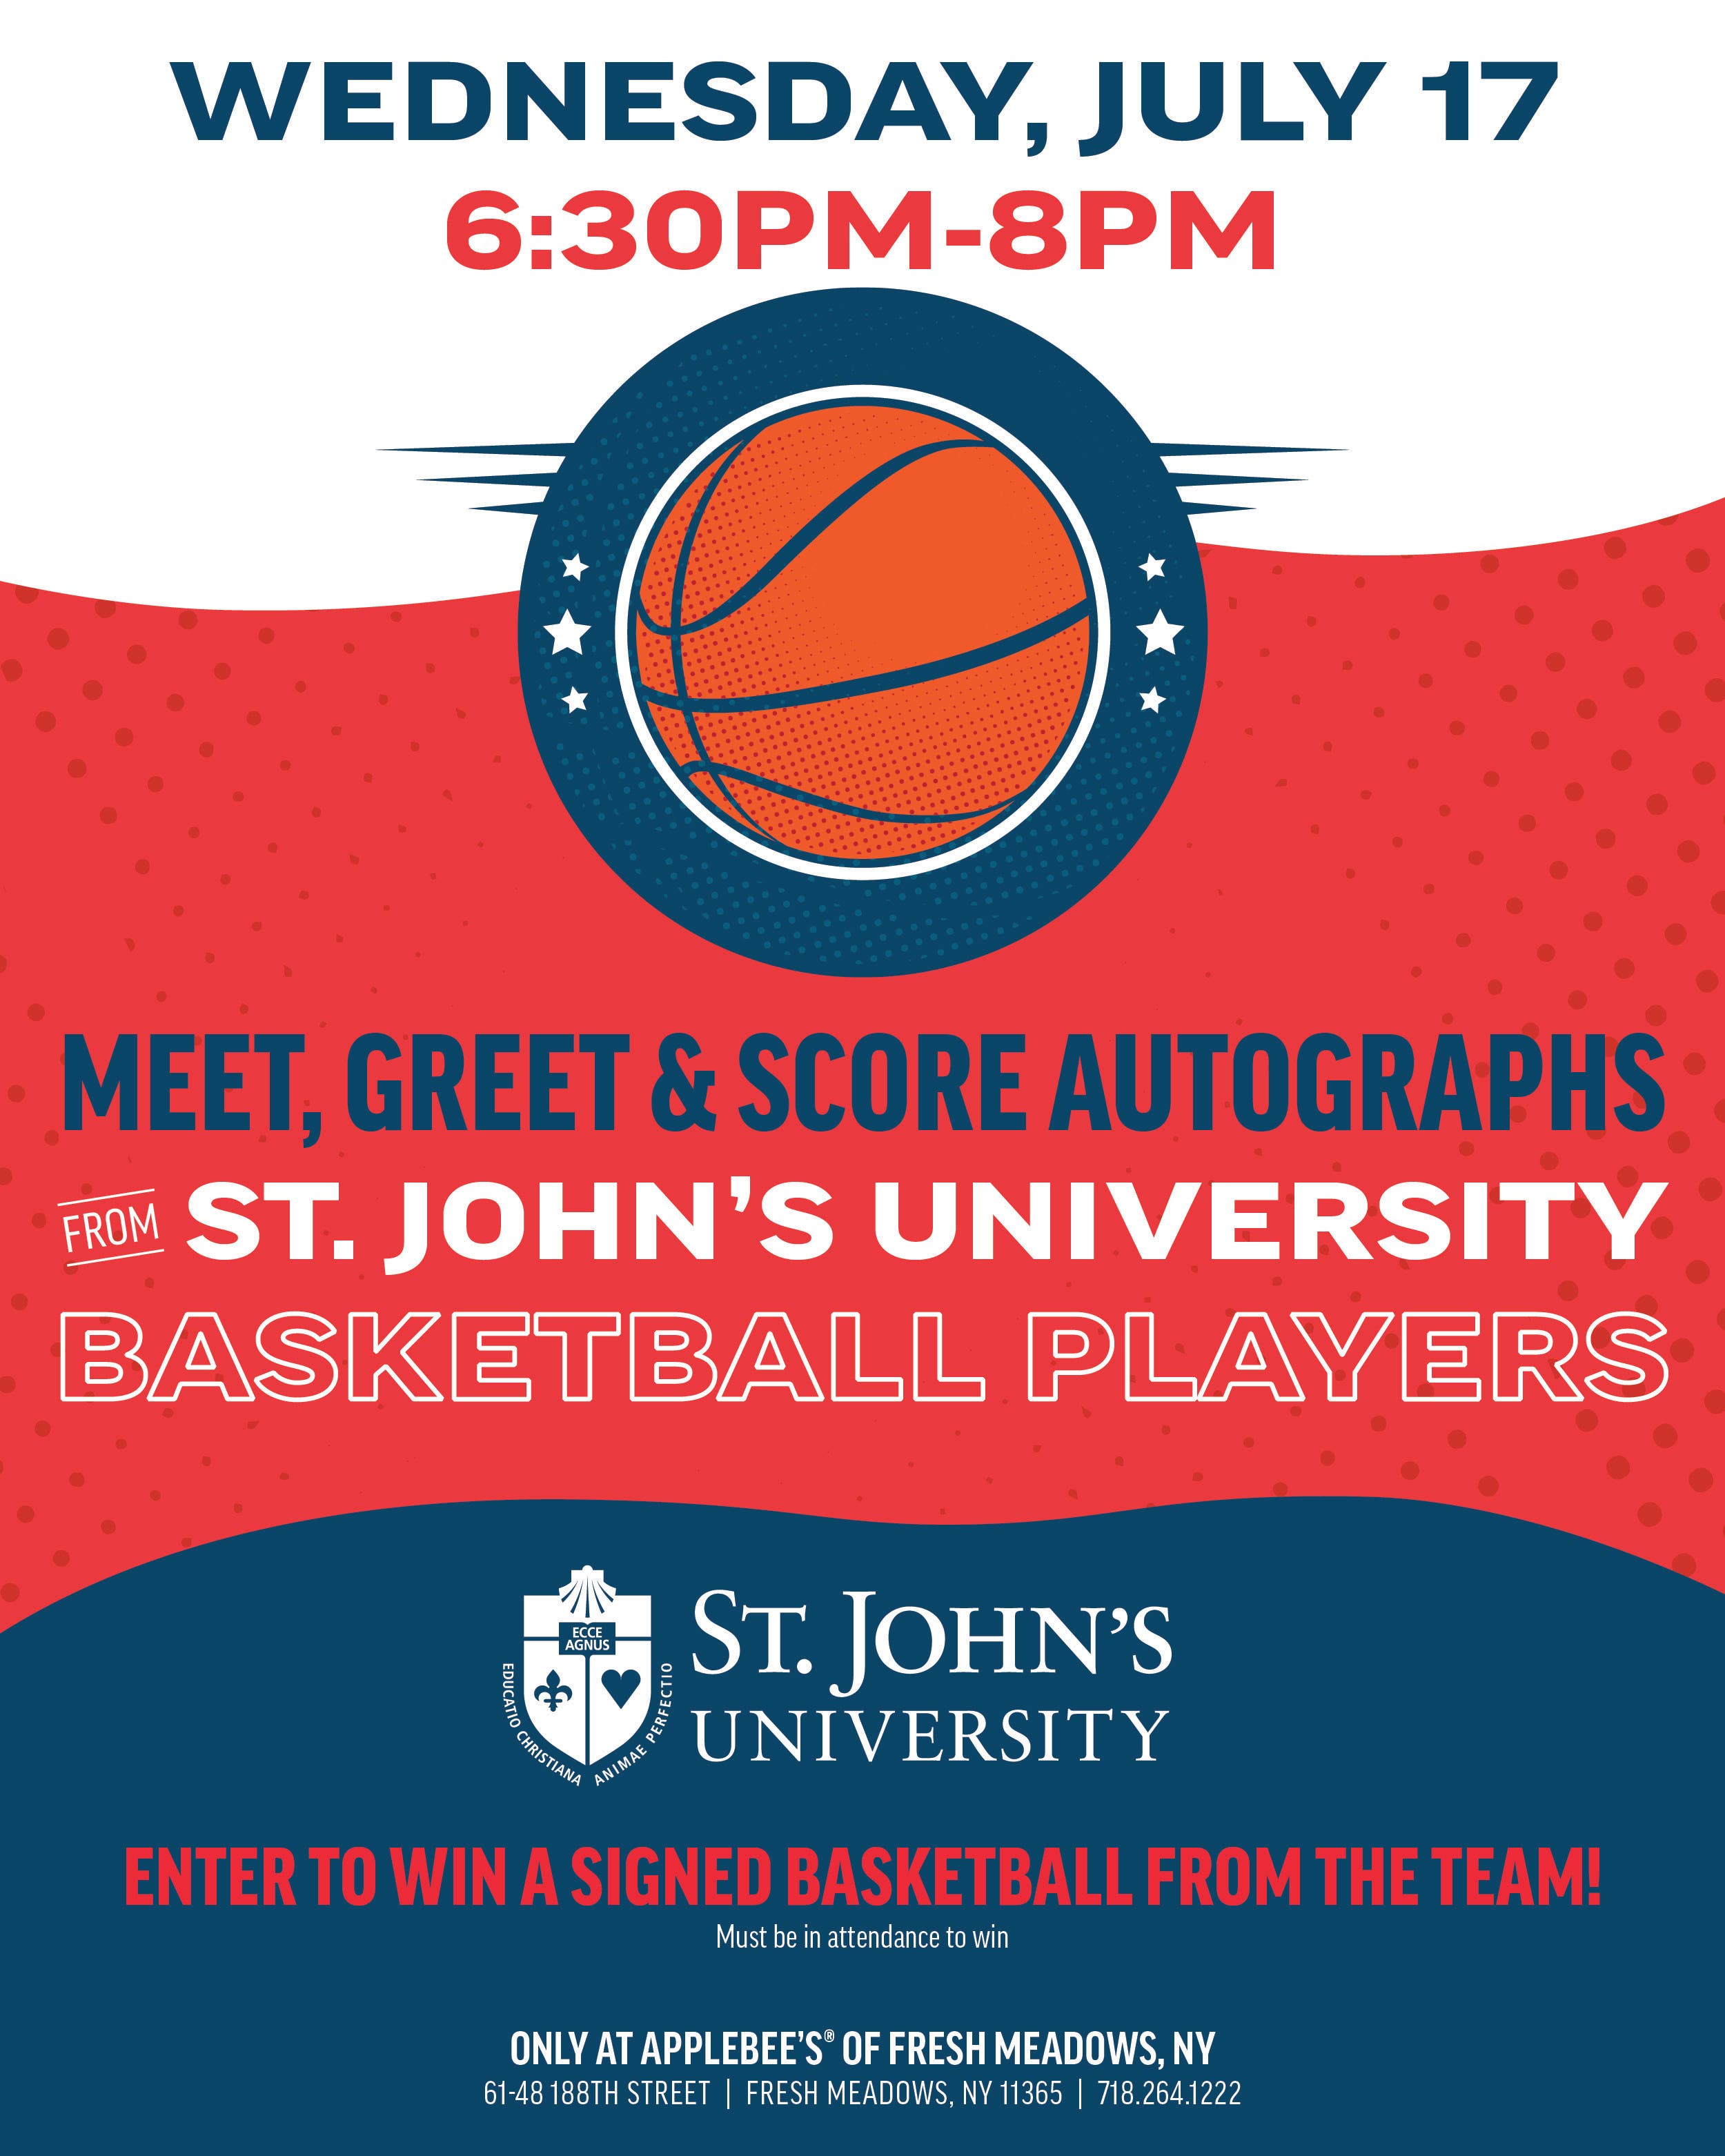 St. John’s Men’s Basketball Team Fan Meet & Greet and Autograph Signing at Applebee’s